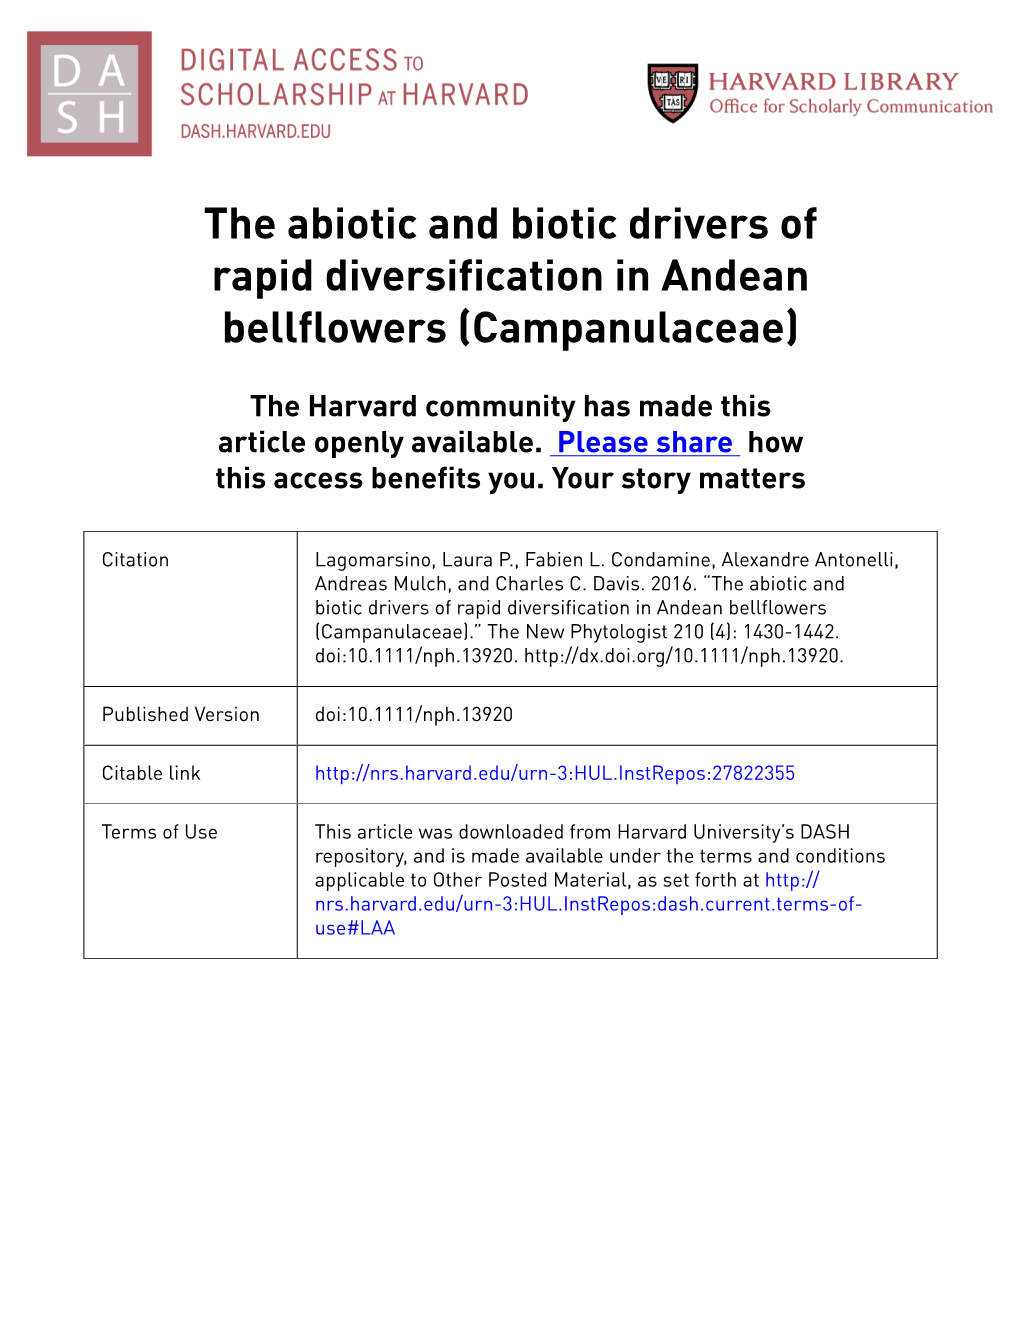 The Abiotic and Biotic Drivers of Rapid Diversification in Andean Bellflowers (Campanulaceae)